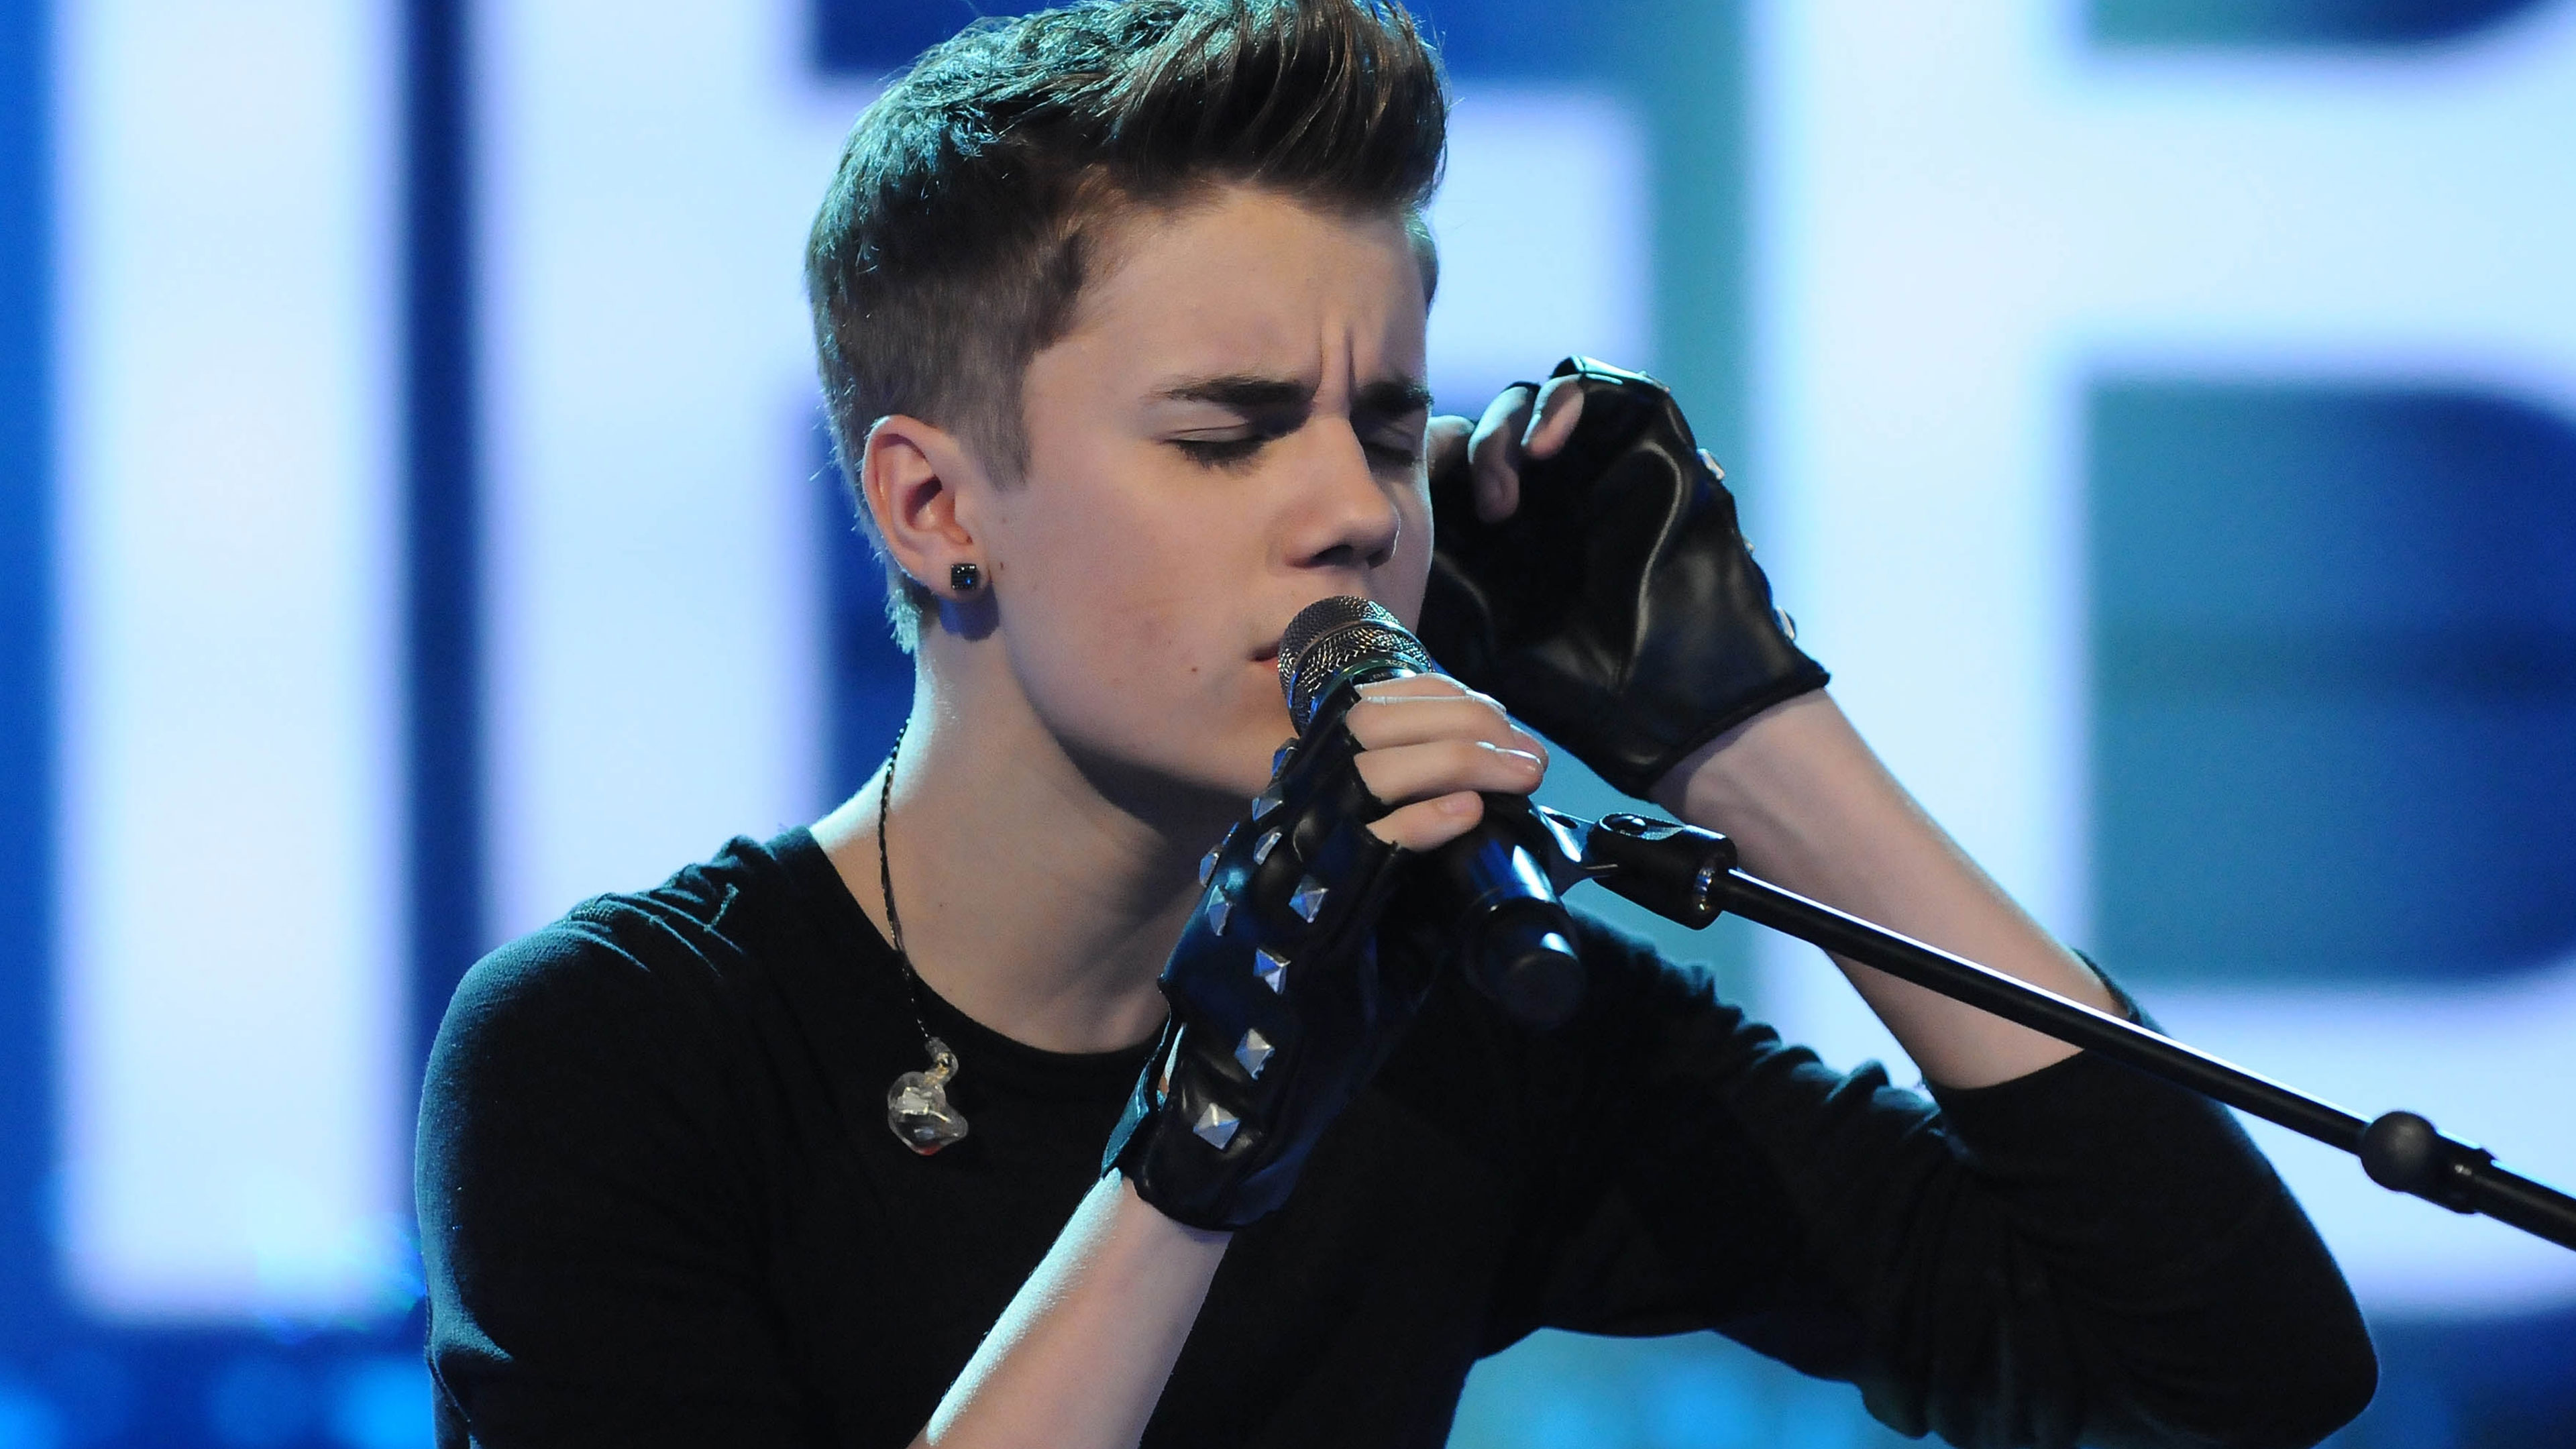 Justin Bieber Singing Live Wallpaper